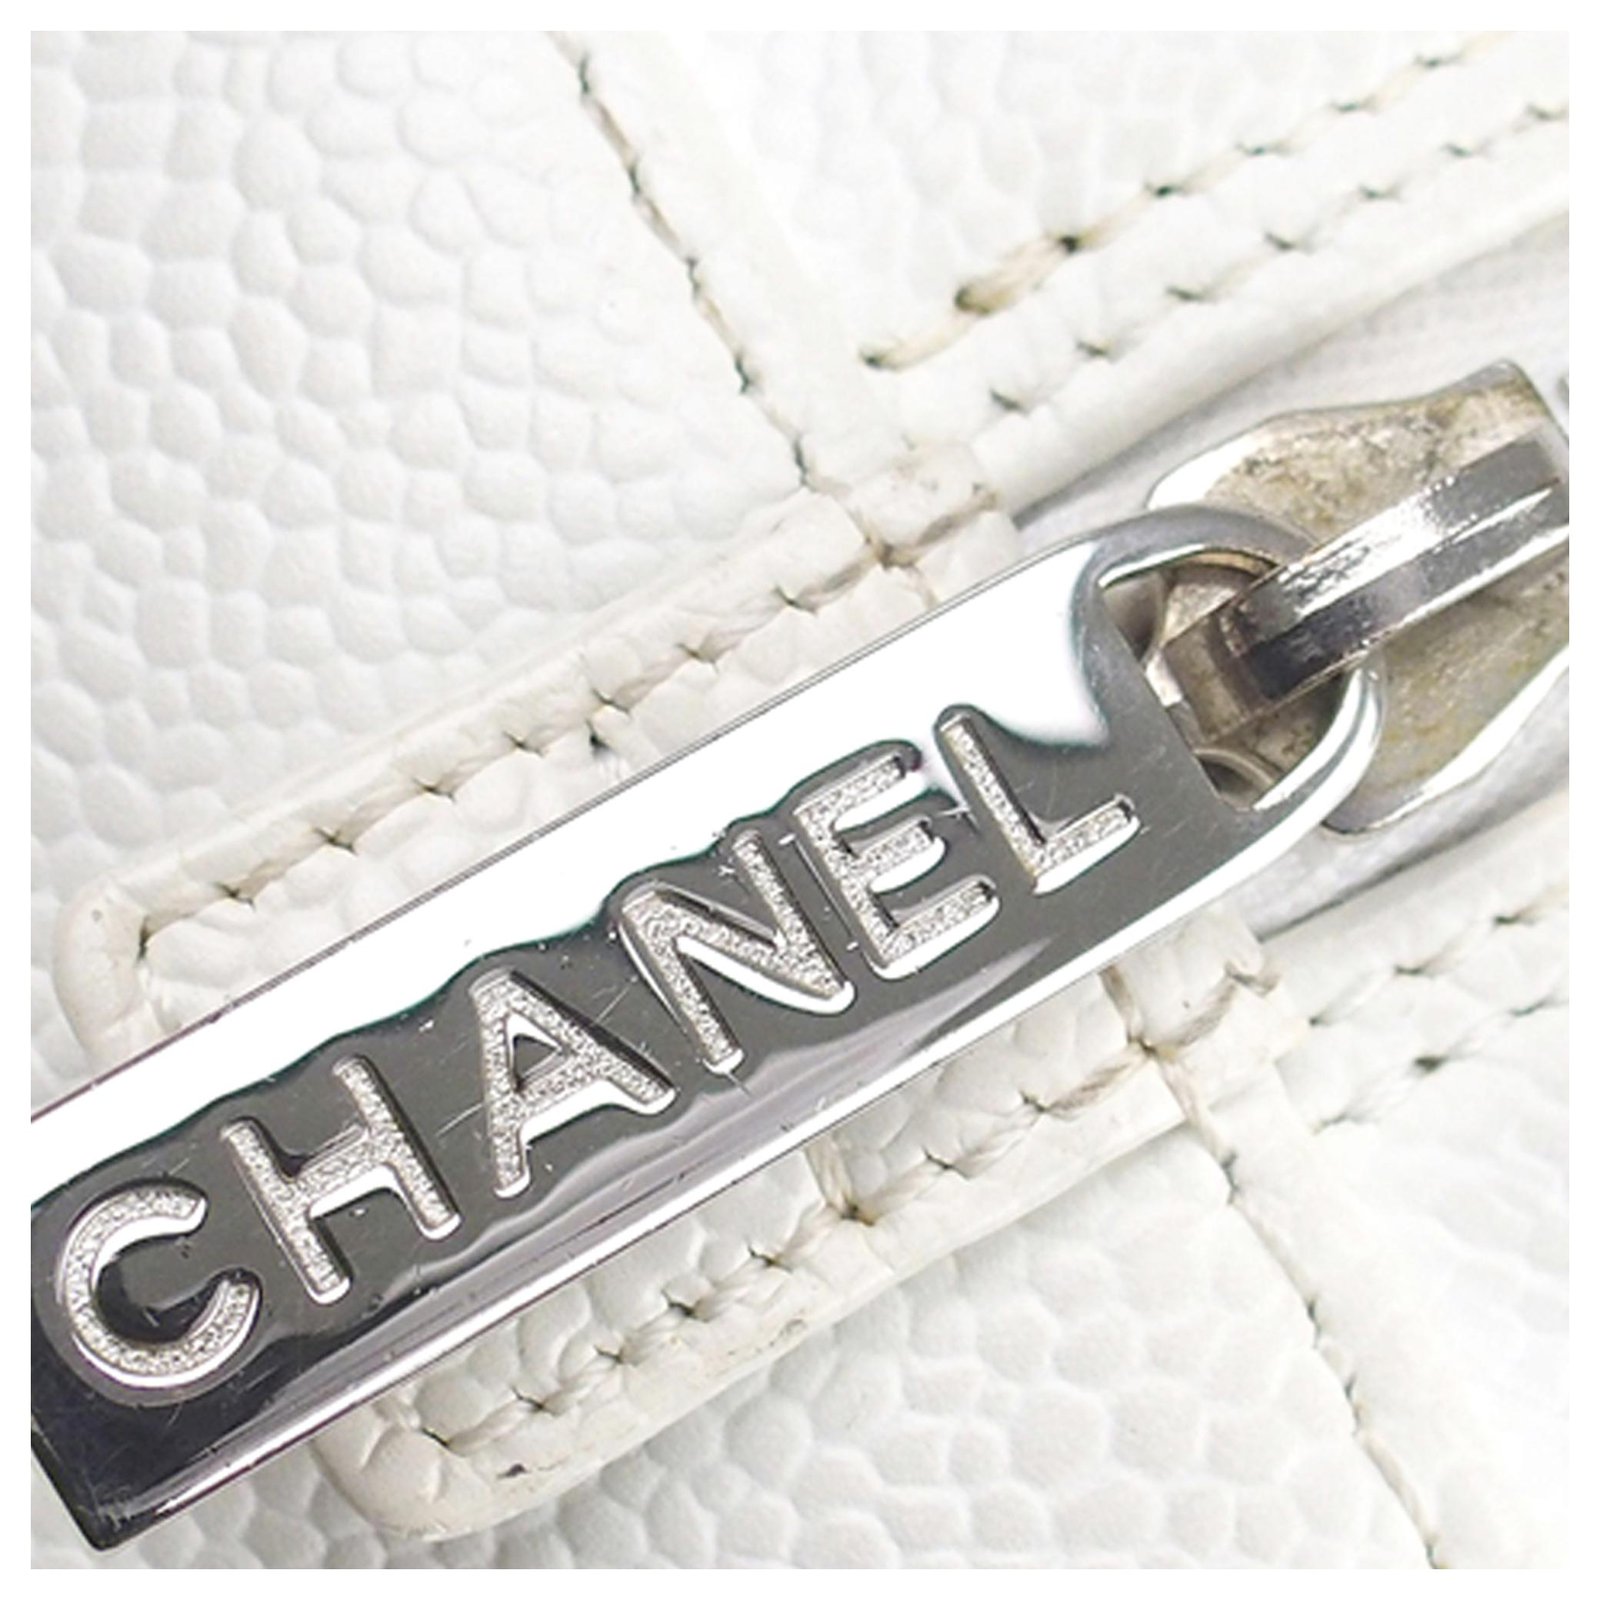 Chanel small shopping bag - Gem